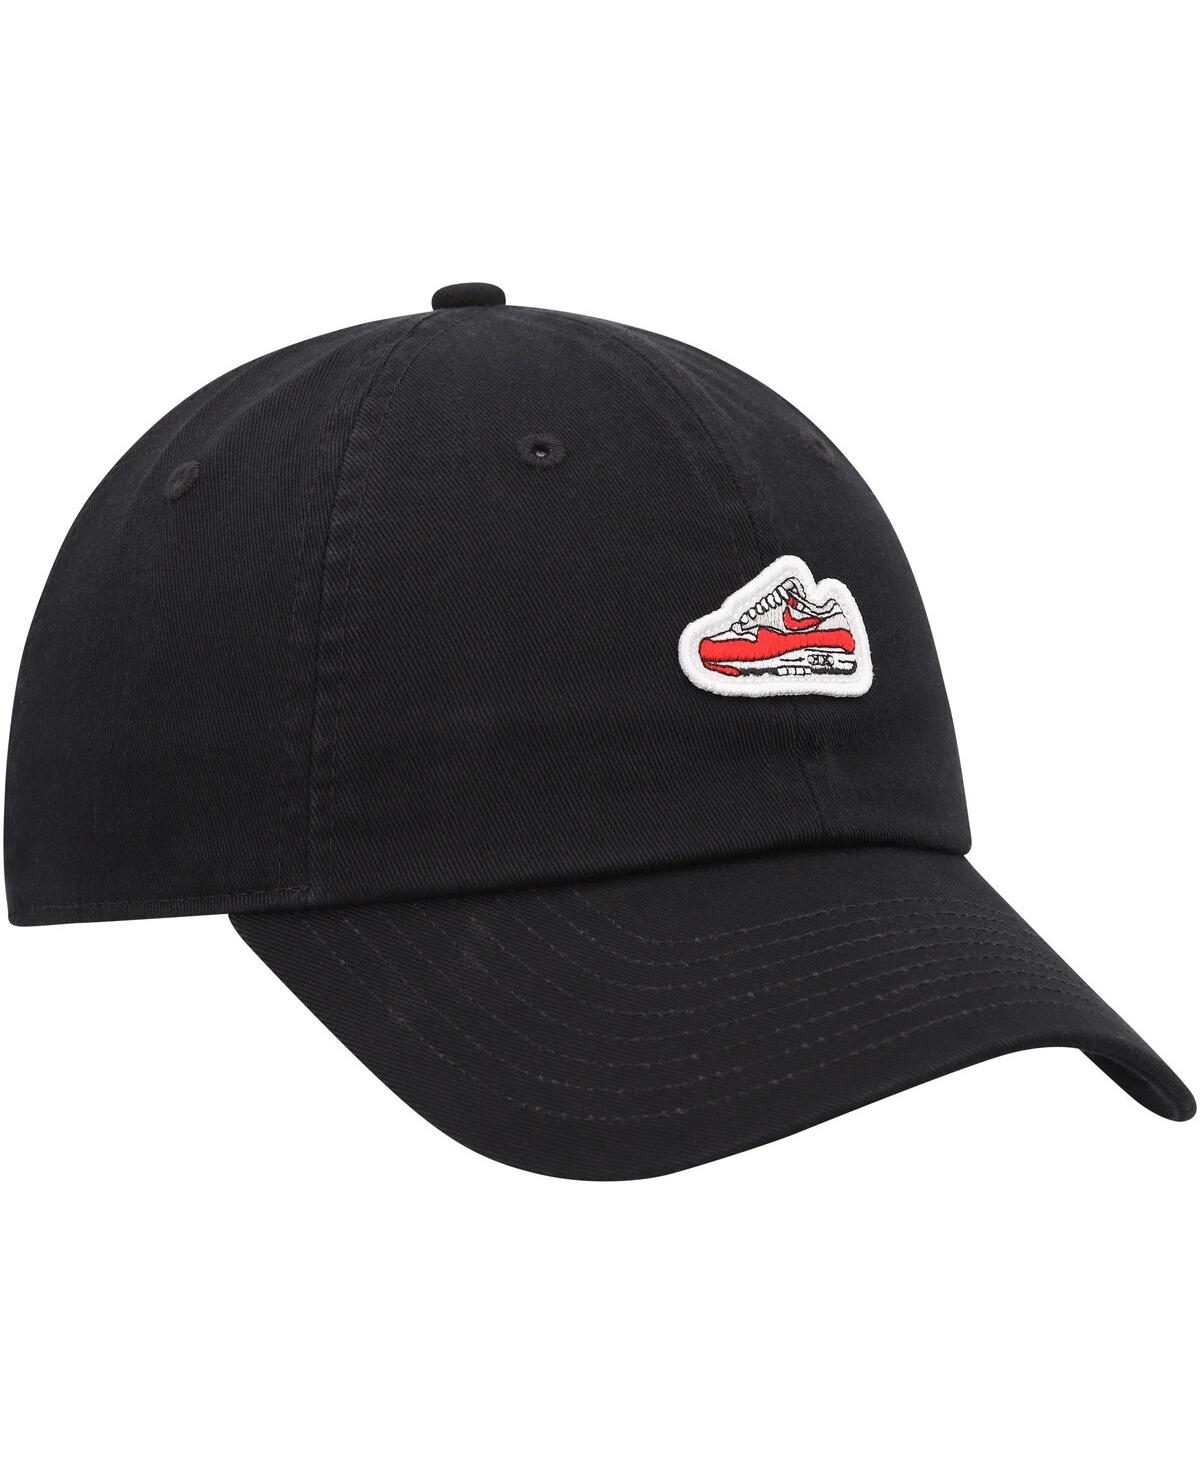 Shop Nike Men's And Women's  Black Air Max 1 Club Adjustable Hat